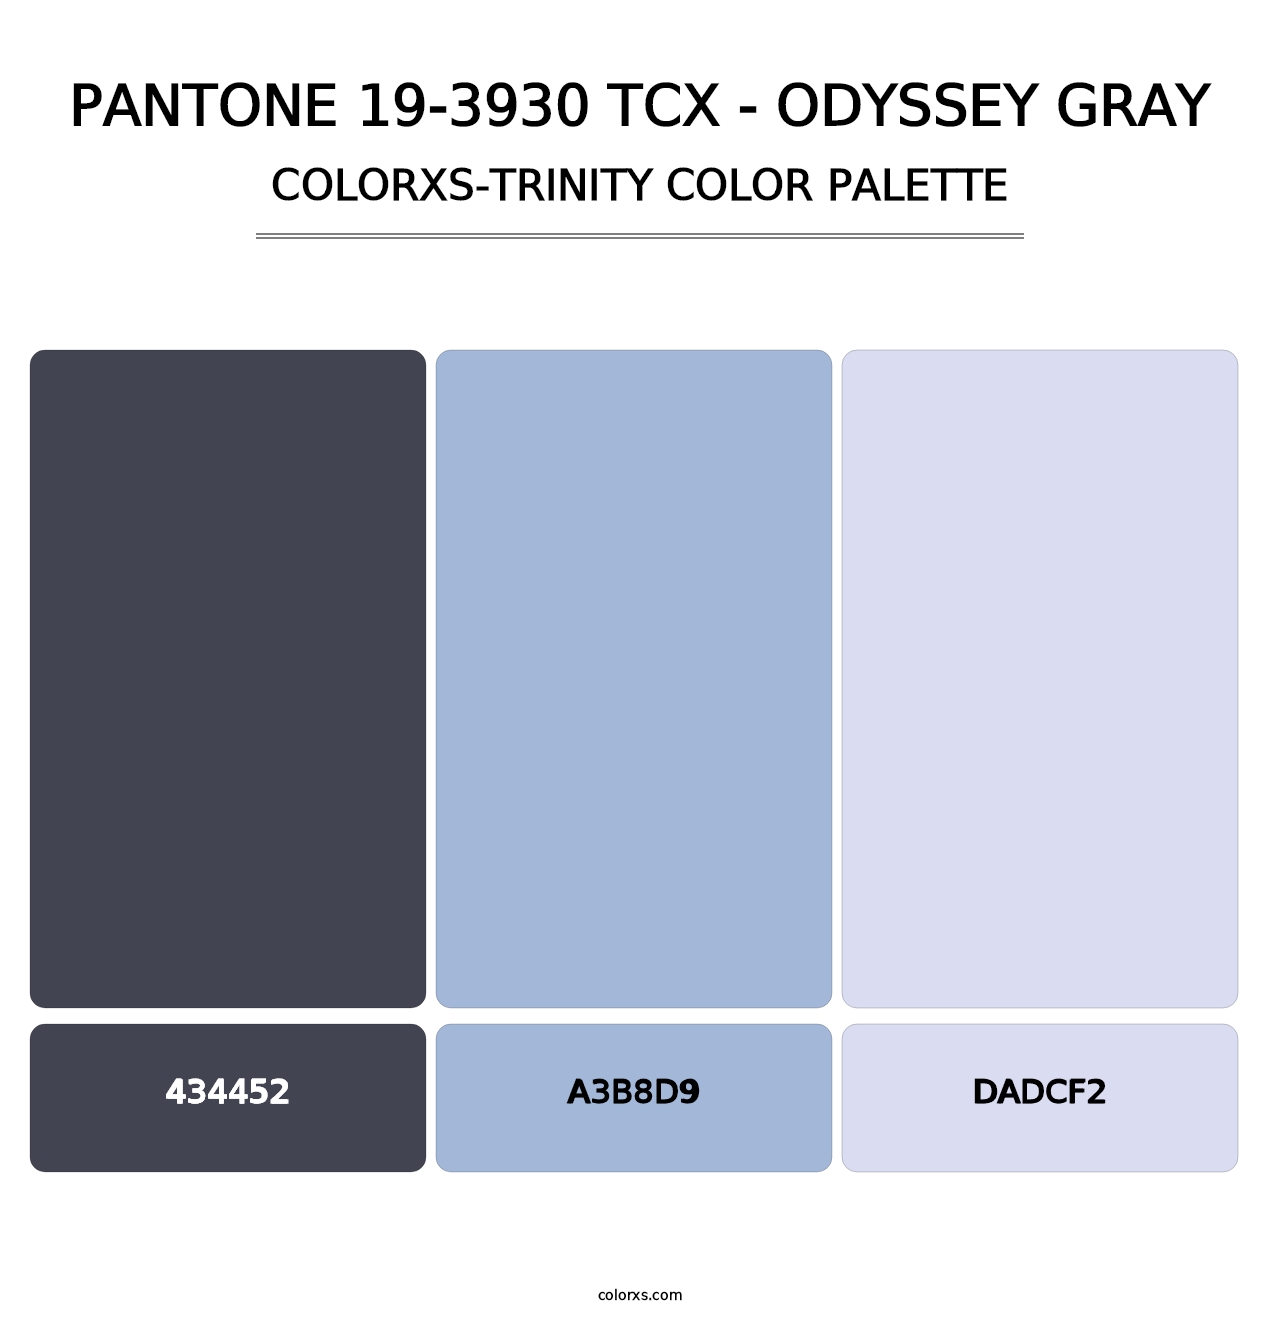 PANTONE 19-3930 TCX - Odyssey Gray - Colorxs Trinity Palette